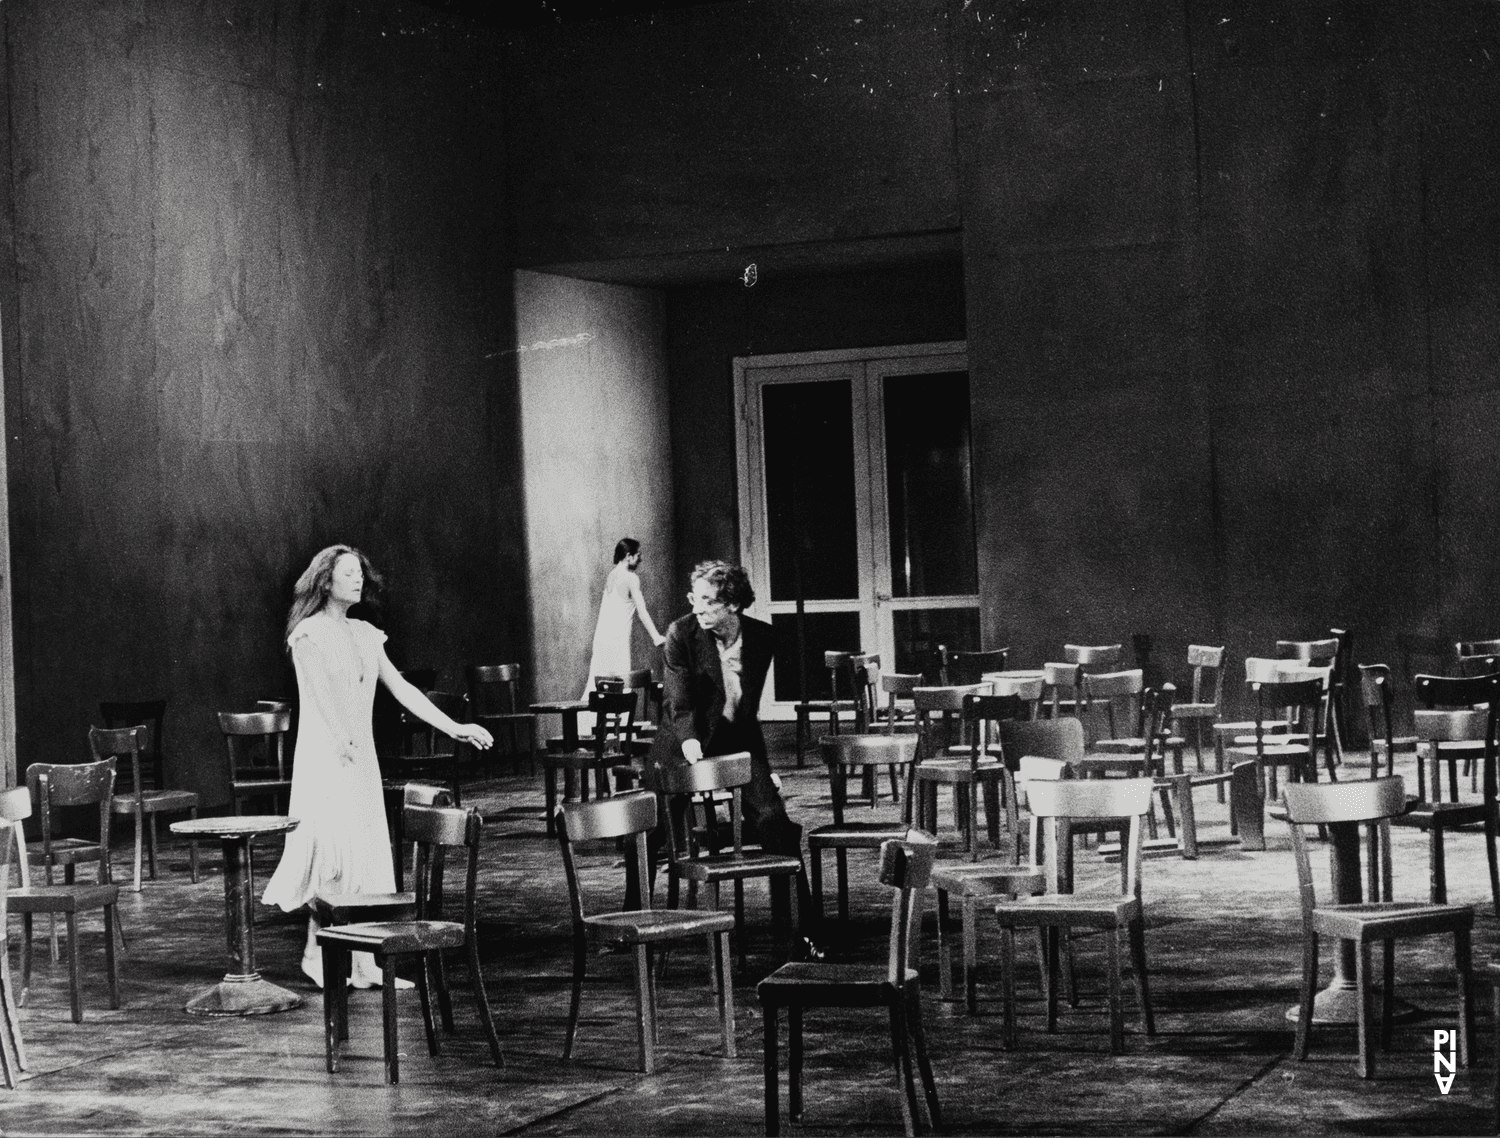 Jean Laurent Sasportes, Malou Airaudo and Pina Bausch in “Café Müller” by Pina Bausch